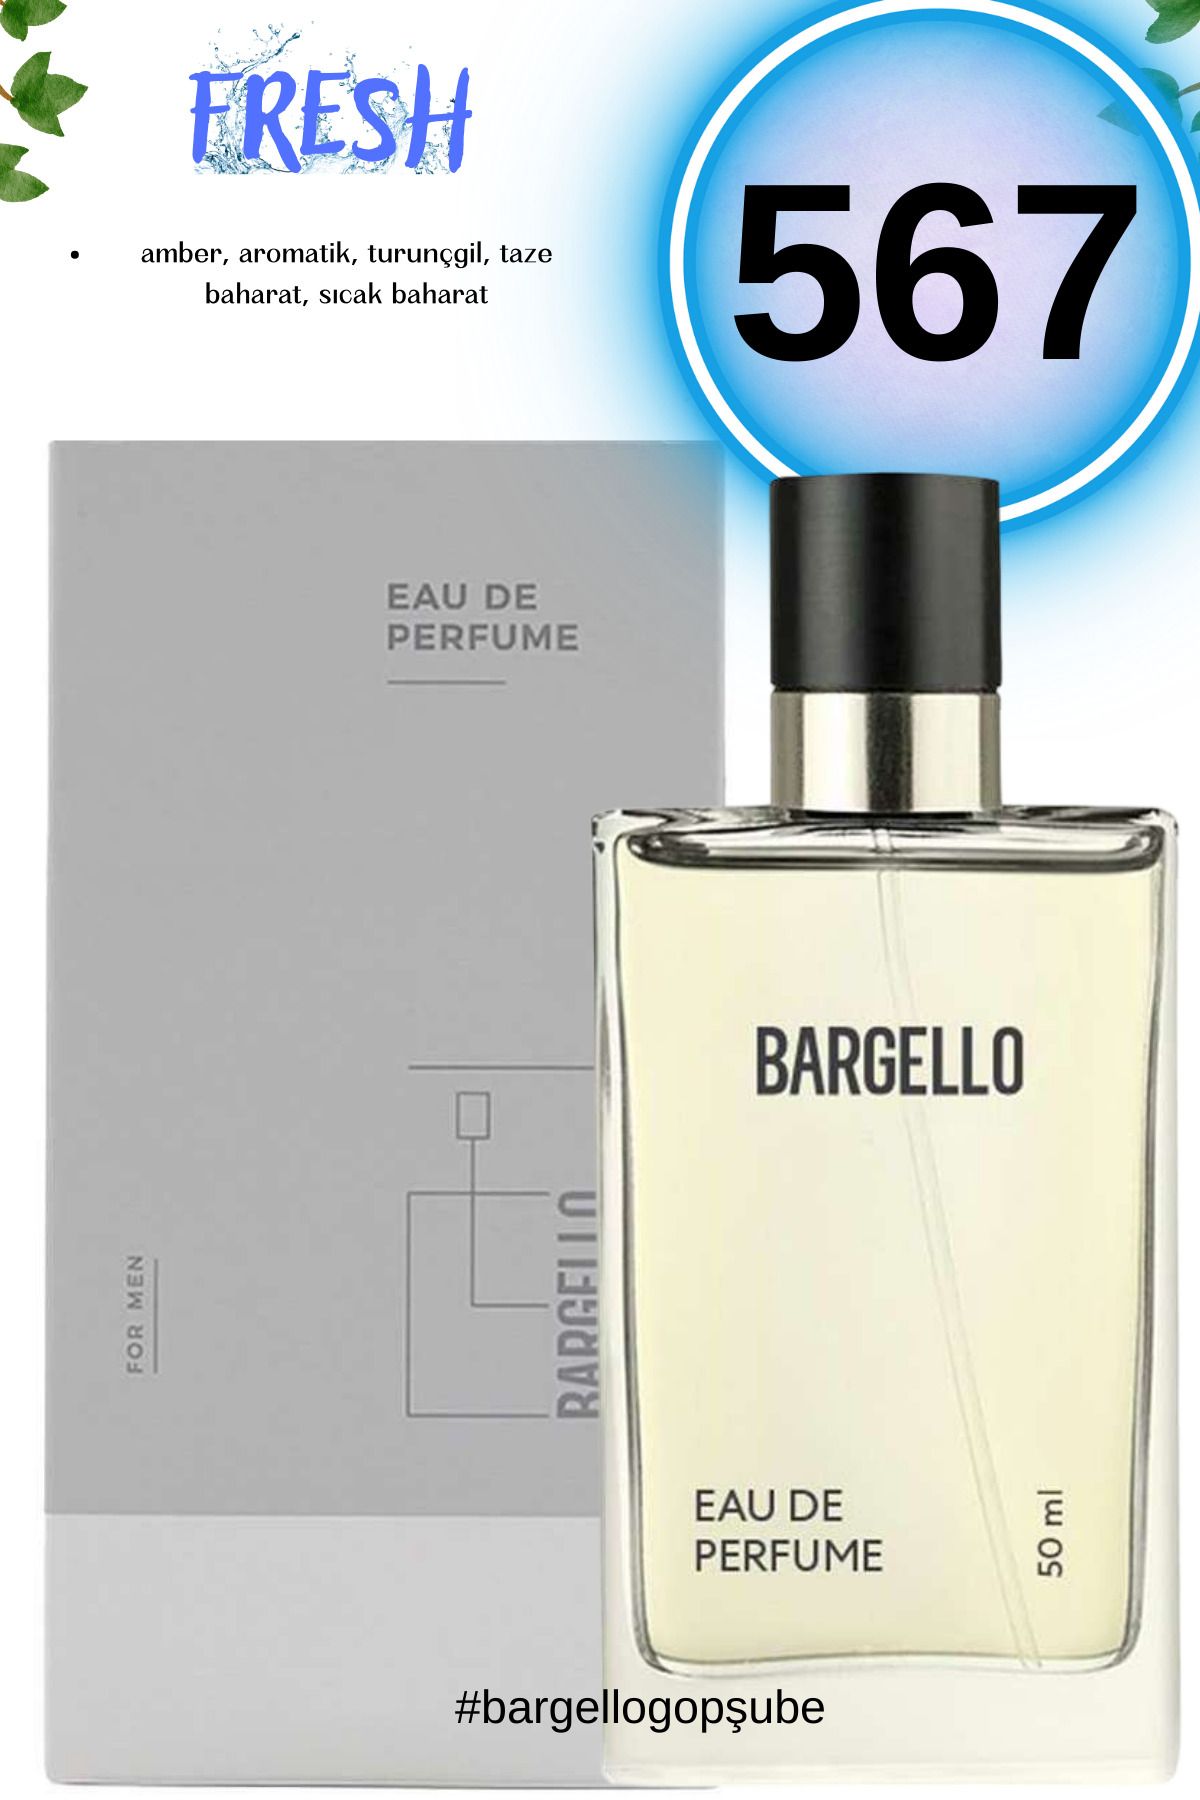 Bargello 567 Fresh Erkek Parfüm 50ml Edp